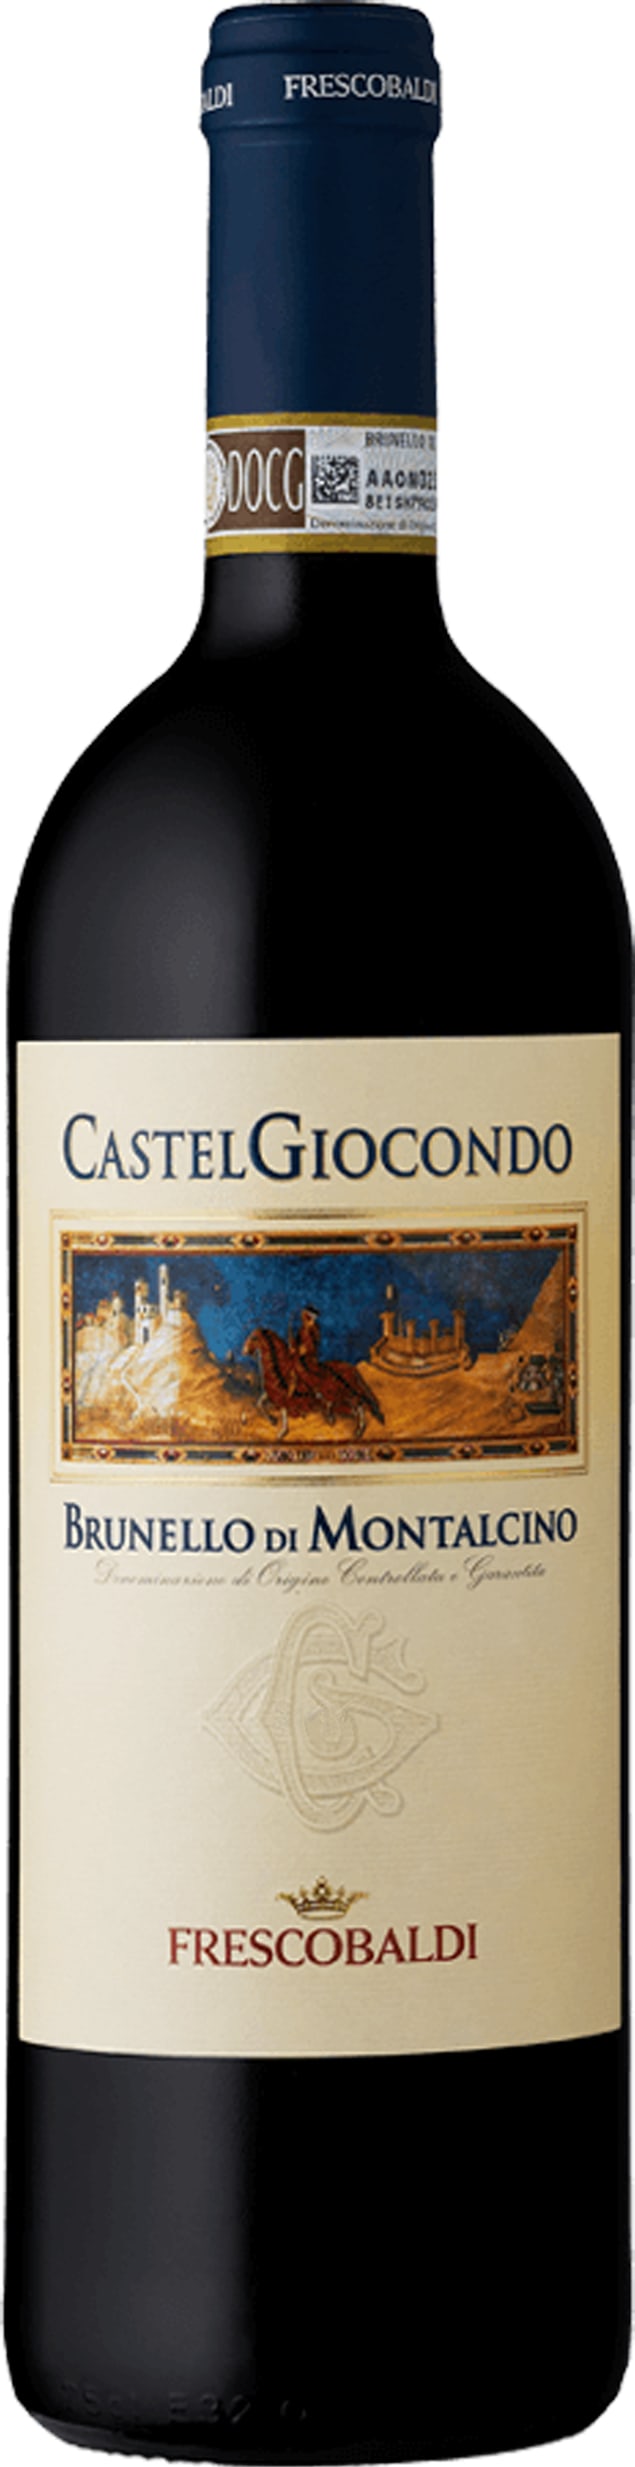 Frescobaldi Castelgiocondo Brunello di Montalcino DOCG 2018 75cl - Buy Frescobaldi Wines from GREAT WINES DIRECT wine shop